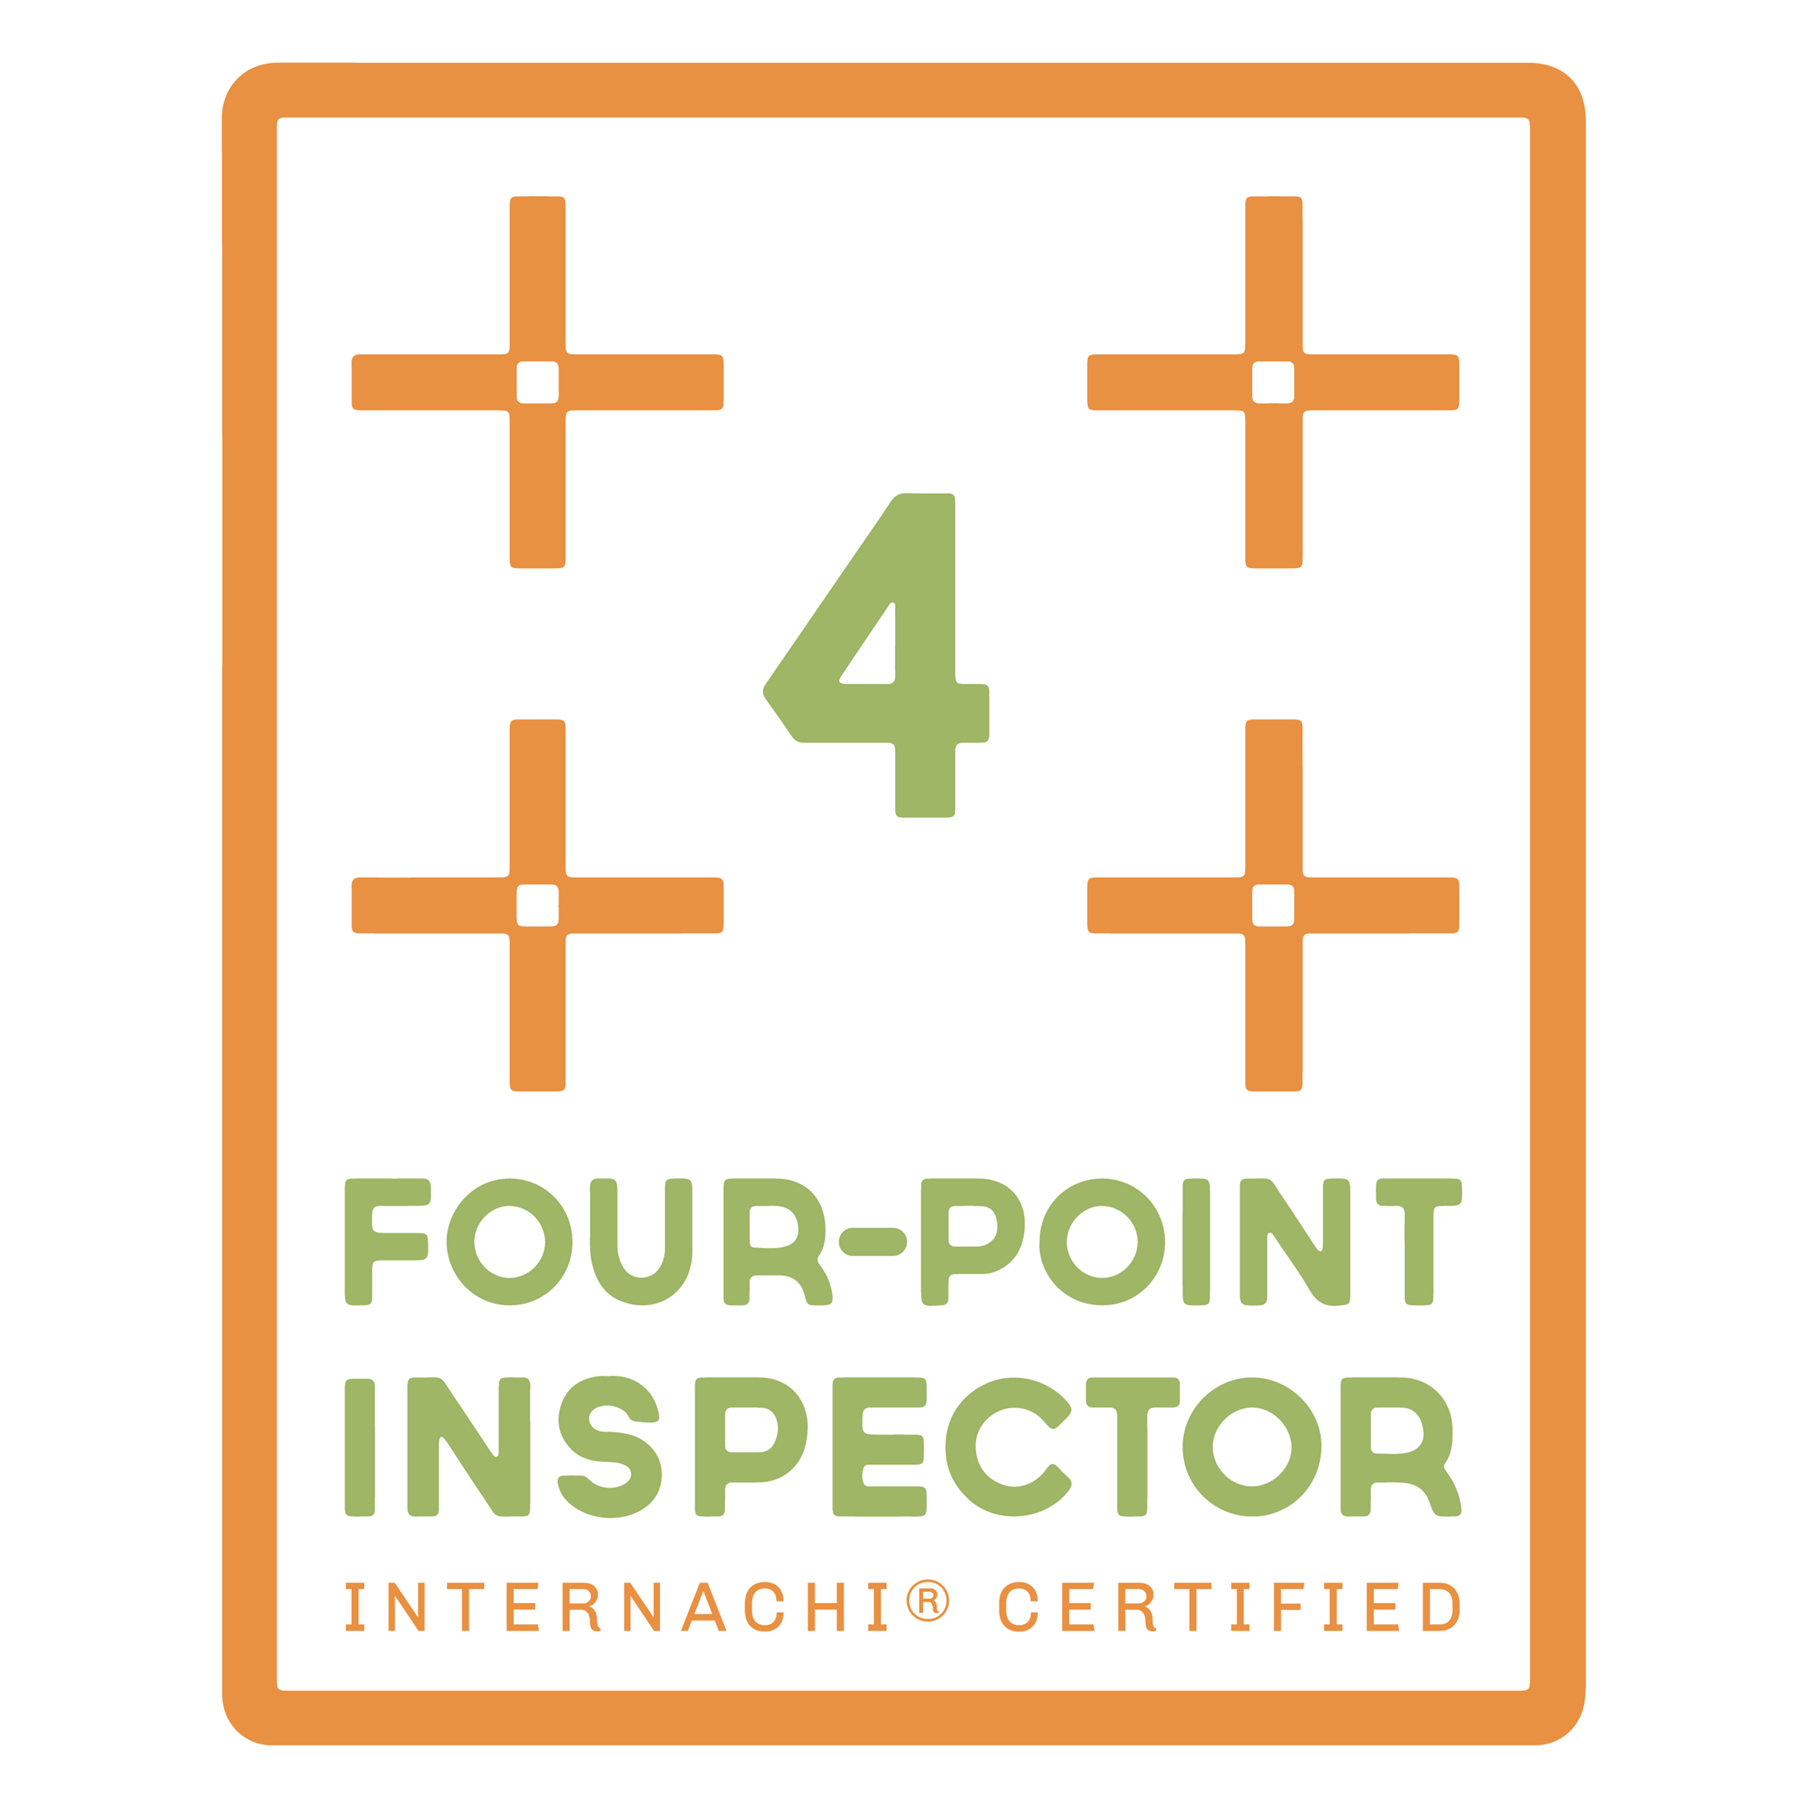 Four-Point Inspector InterNACHI Certified